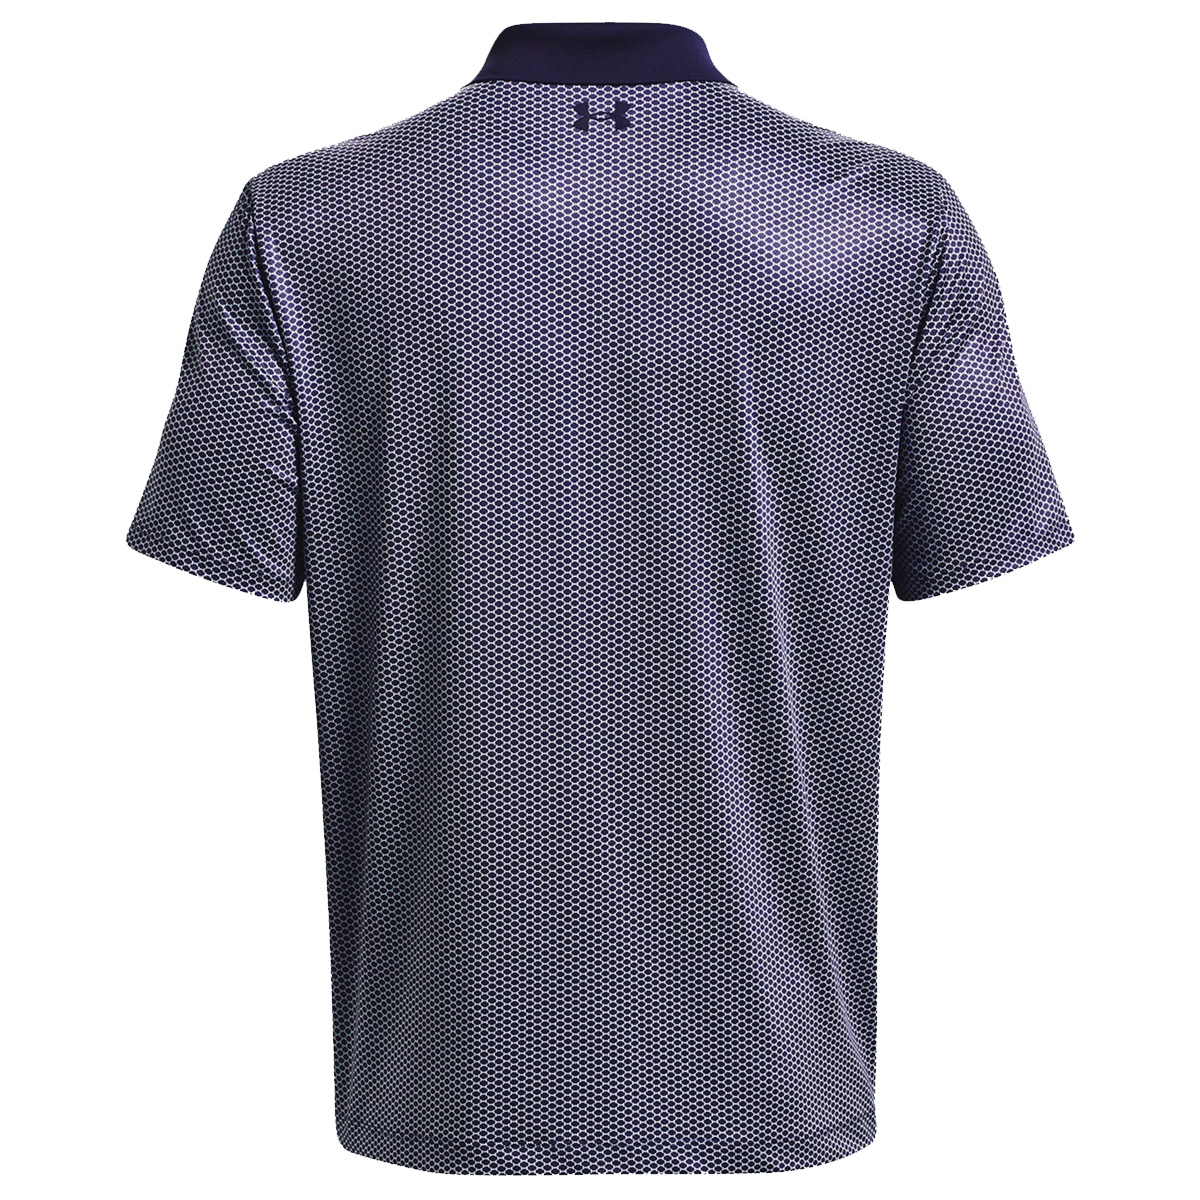 Under Armour Golf Performance 3.0 Mens Printed Polo Shirt 